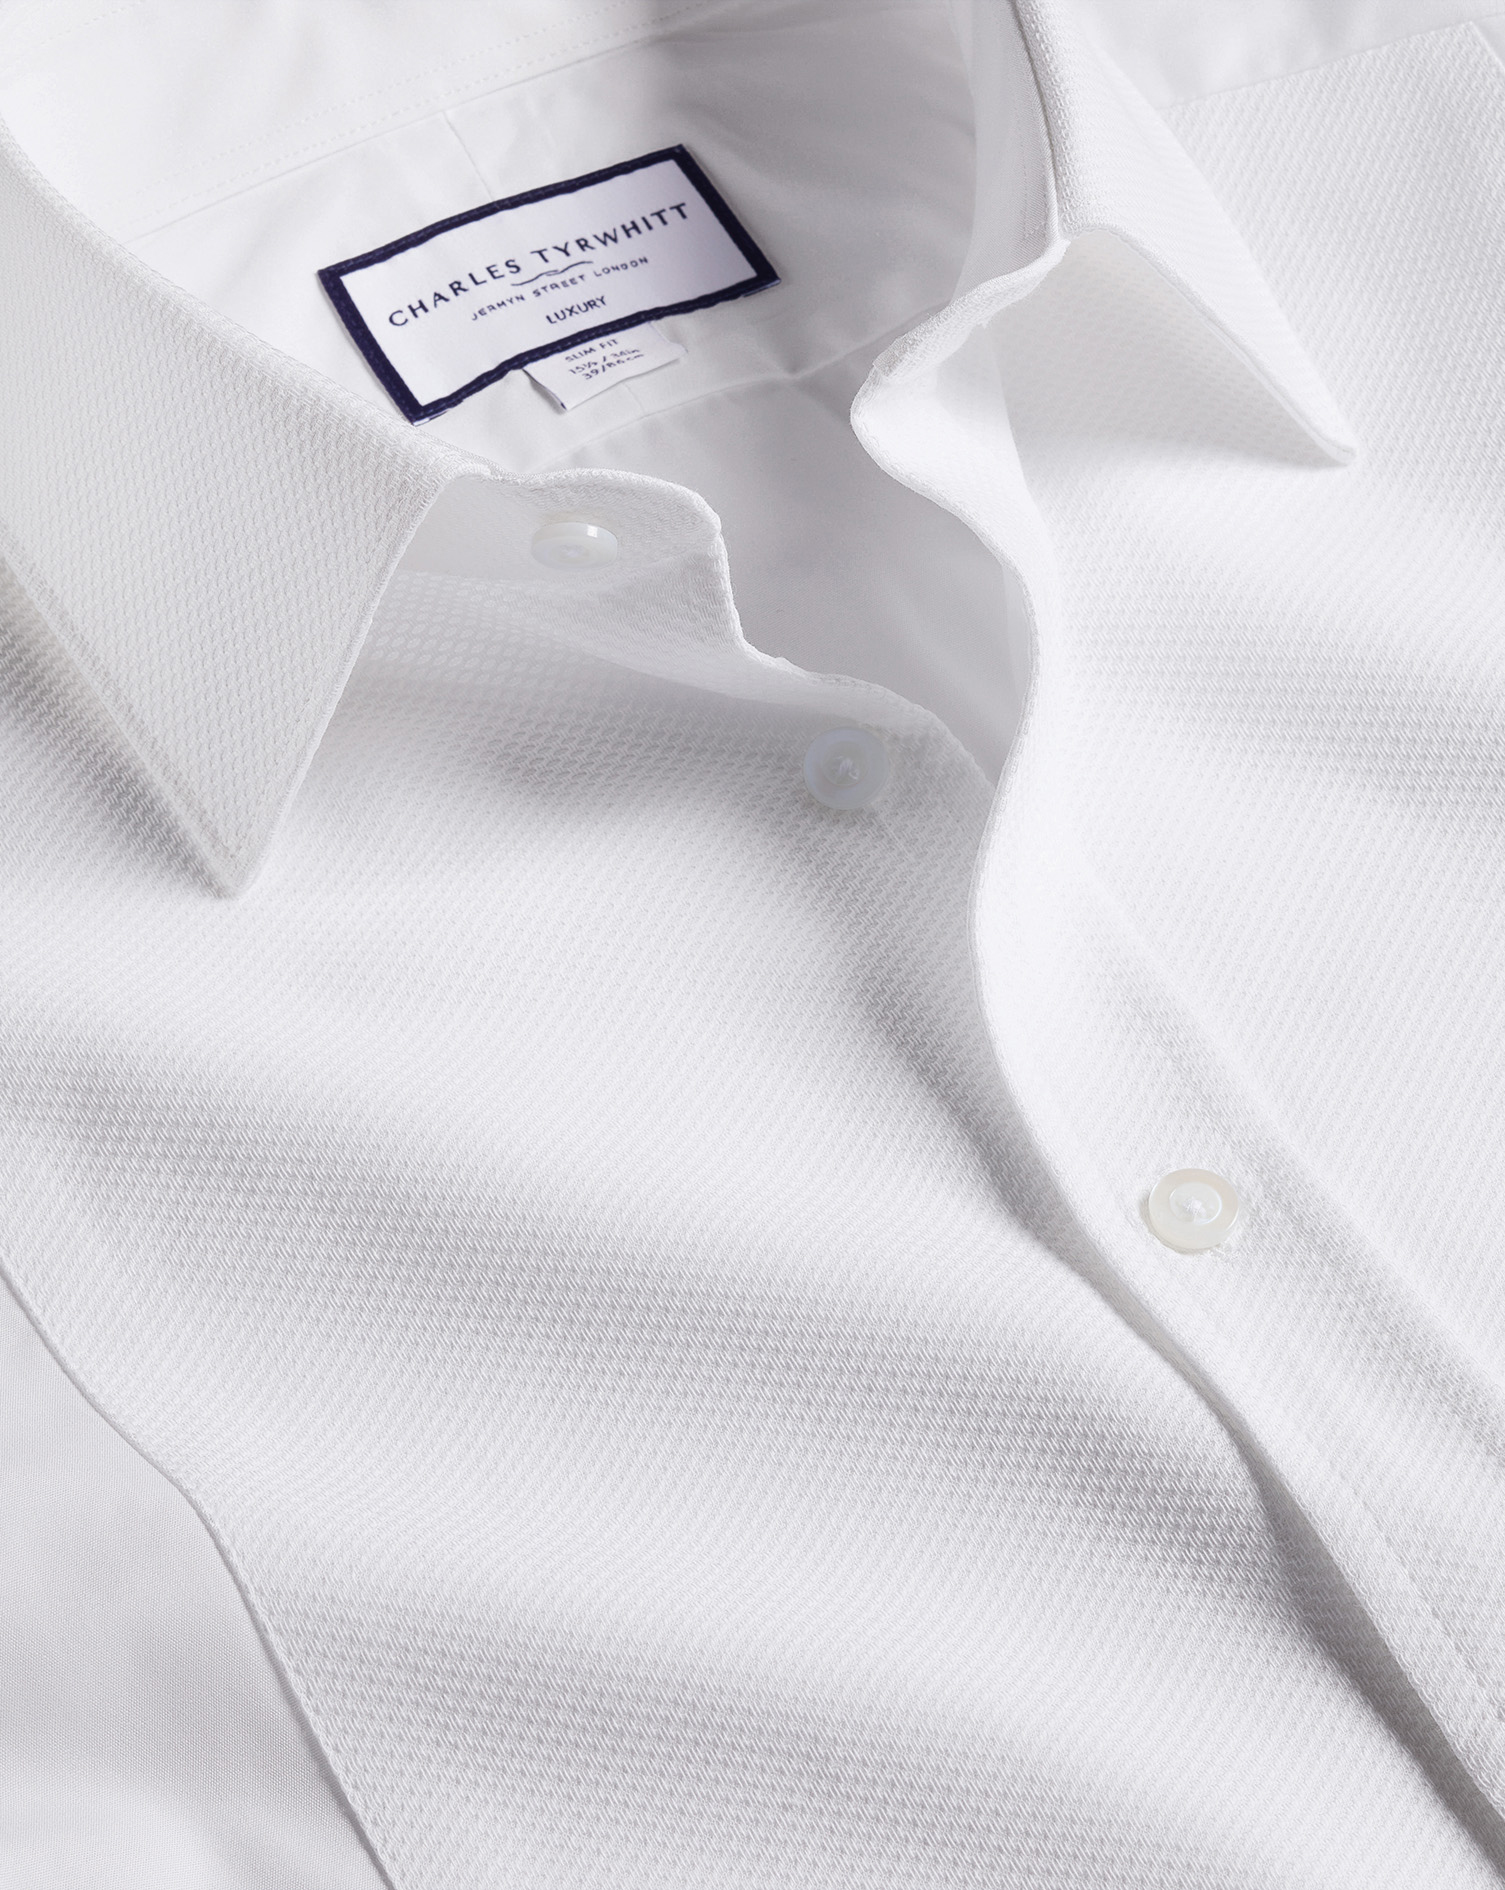 Men's Charles Tyrwhitt Marcella Bib Evening Dress Shirt - White French Cuff Size Medium Cotton
